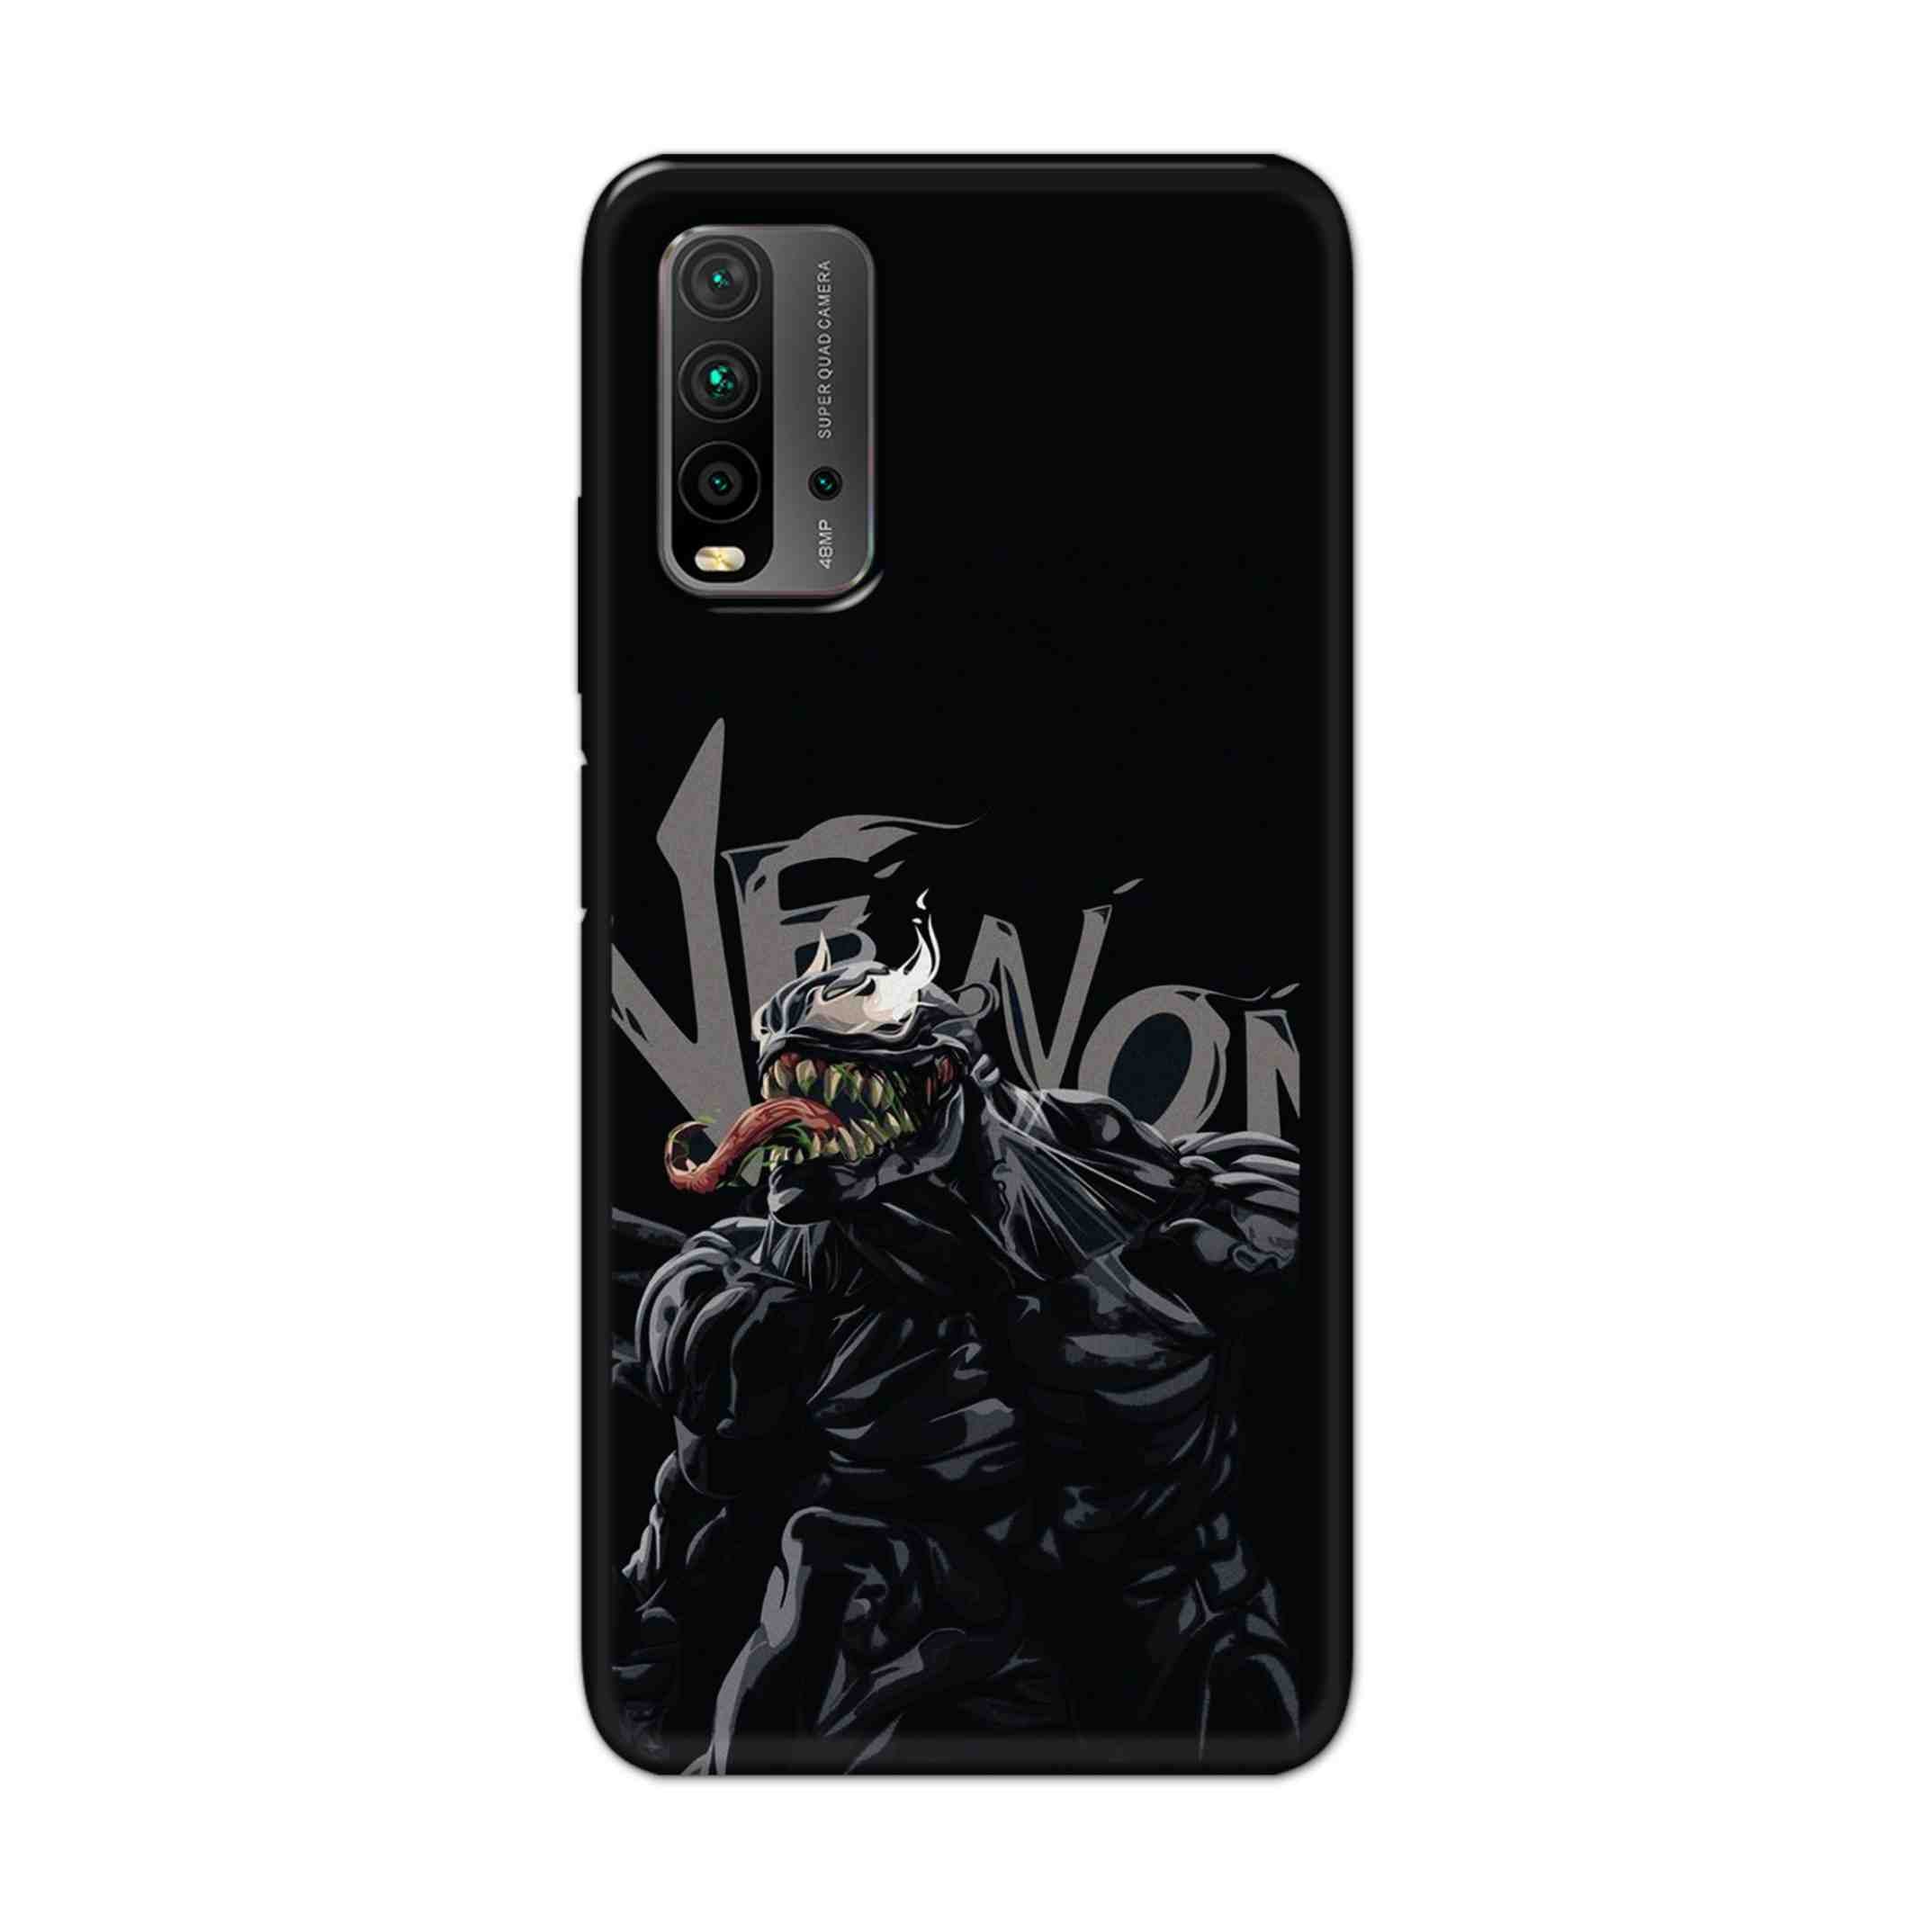 Buy  Venom Hard Back Mobile Phone Case Cover For Redmi 9 Power Online